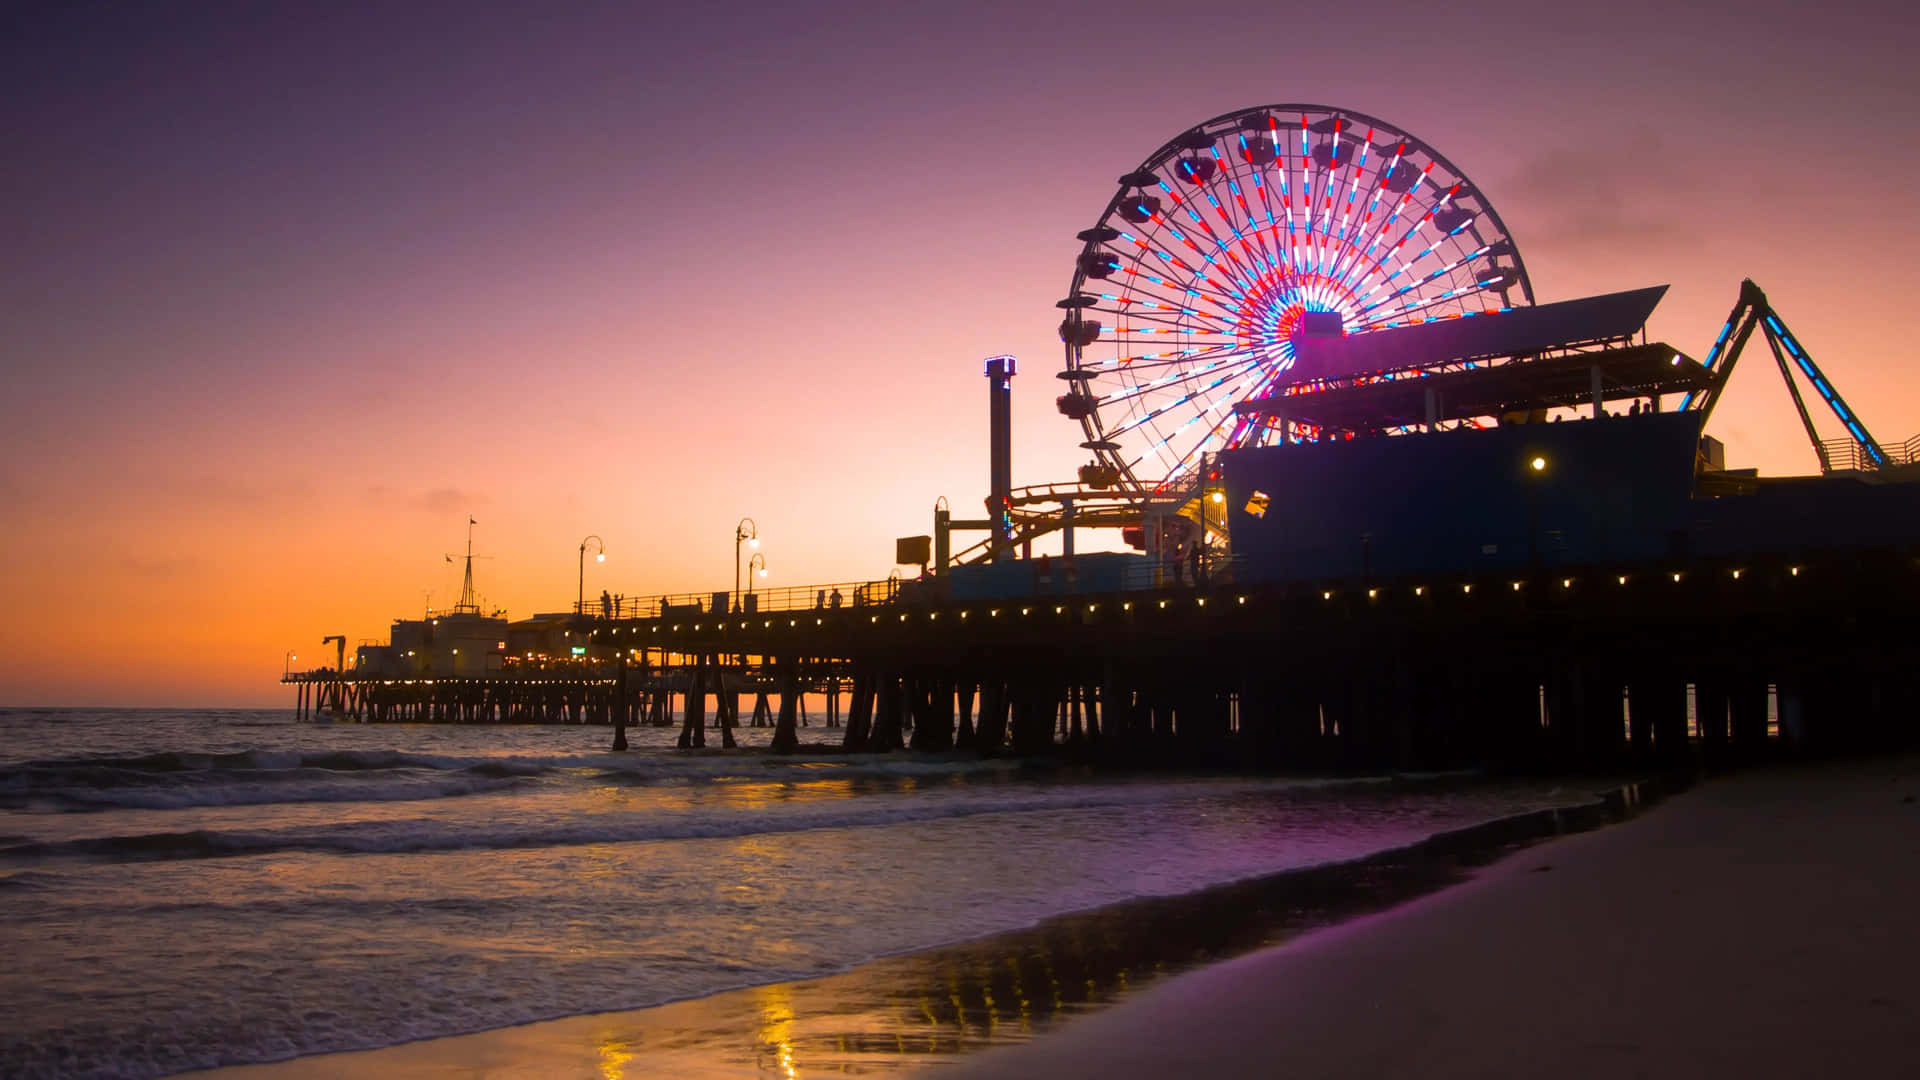 "Experience California's Sensational Sunset"